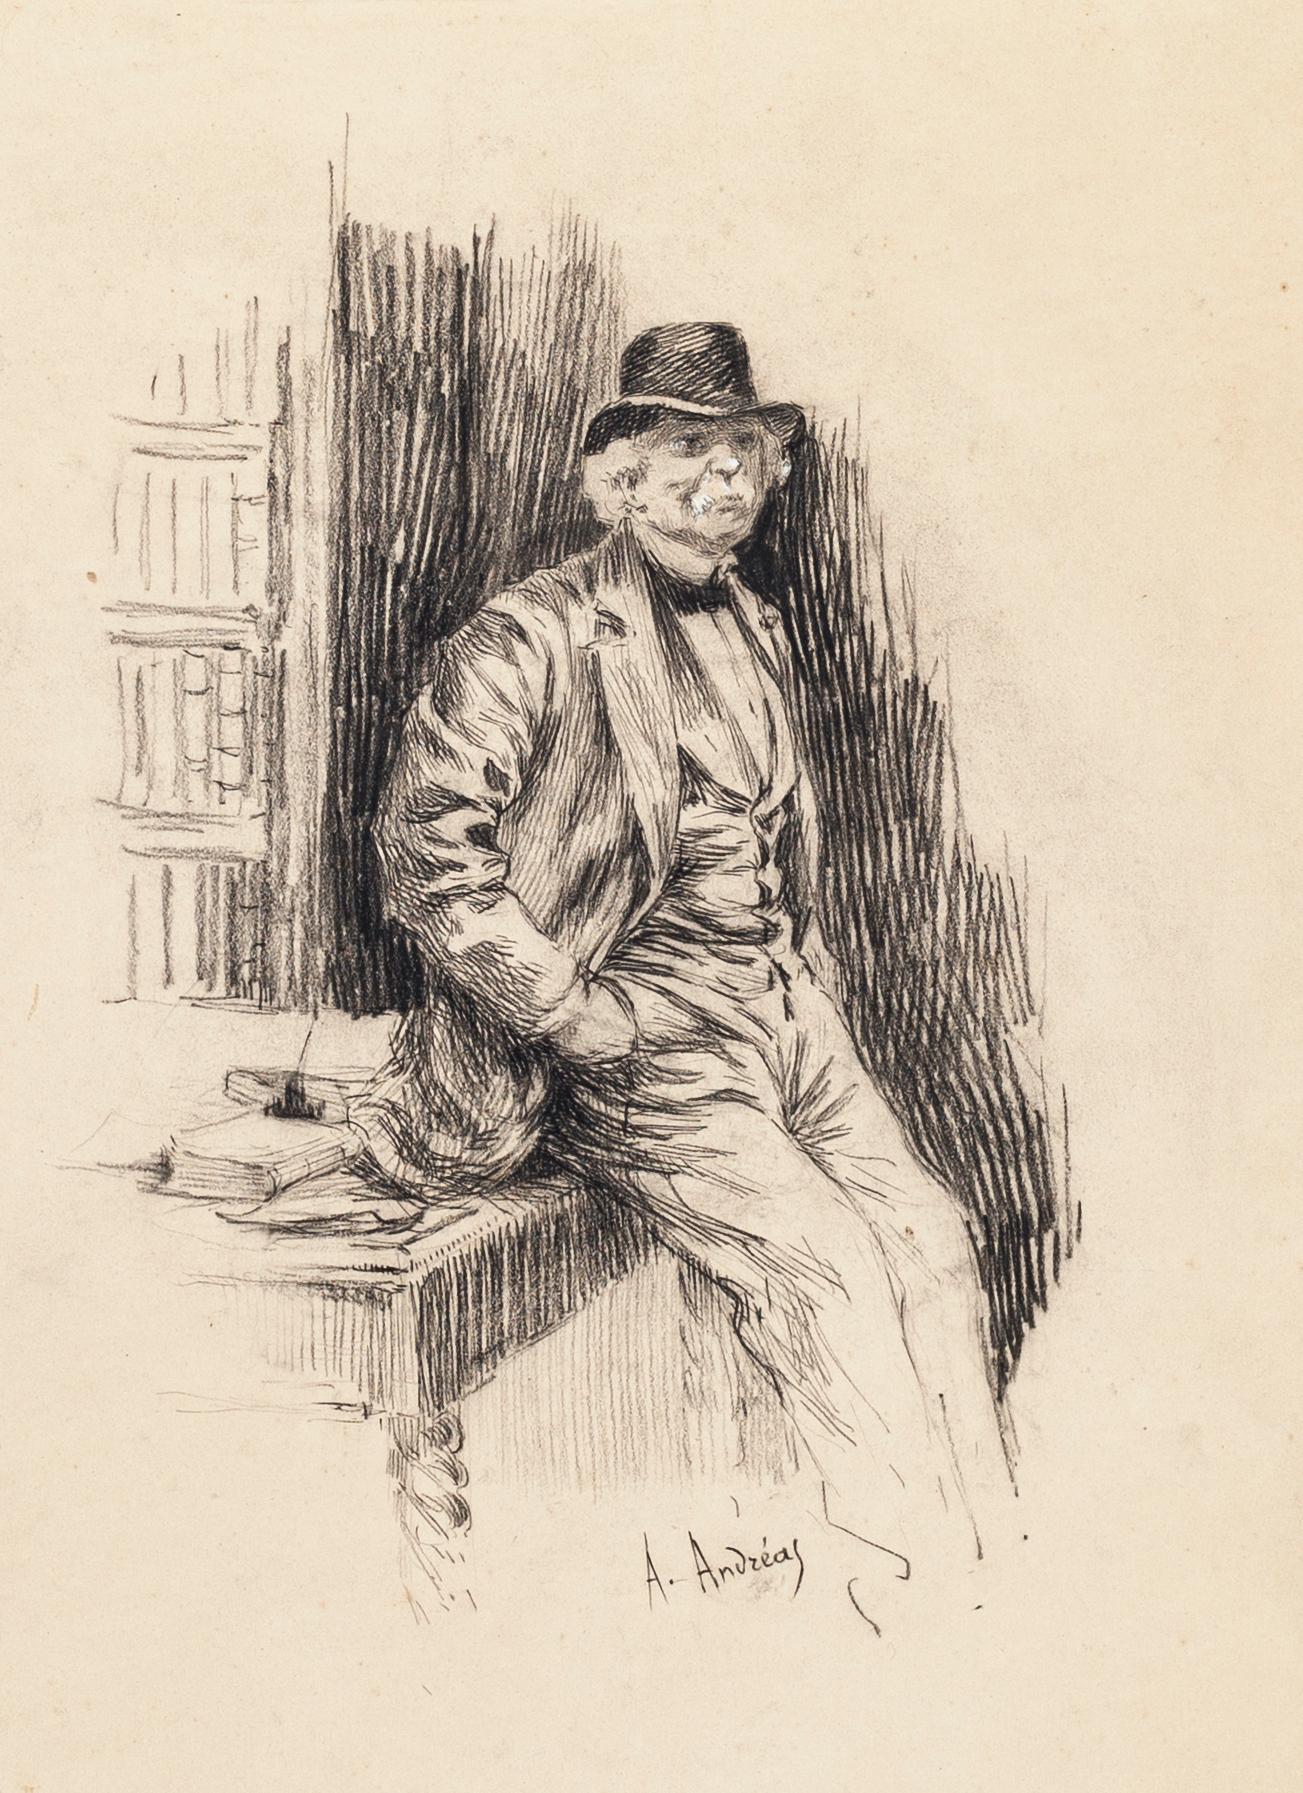 Andreas Achenbach Portrait Print - Portrait of Gentleman - Original Lithograph by A. Achenbach - Late 19th Century